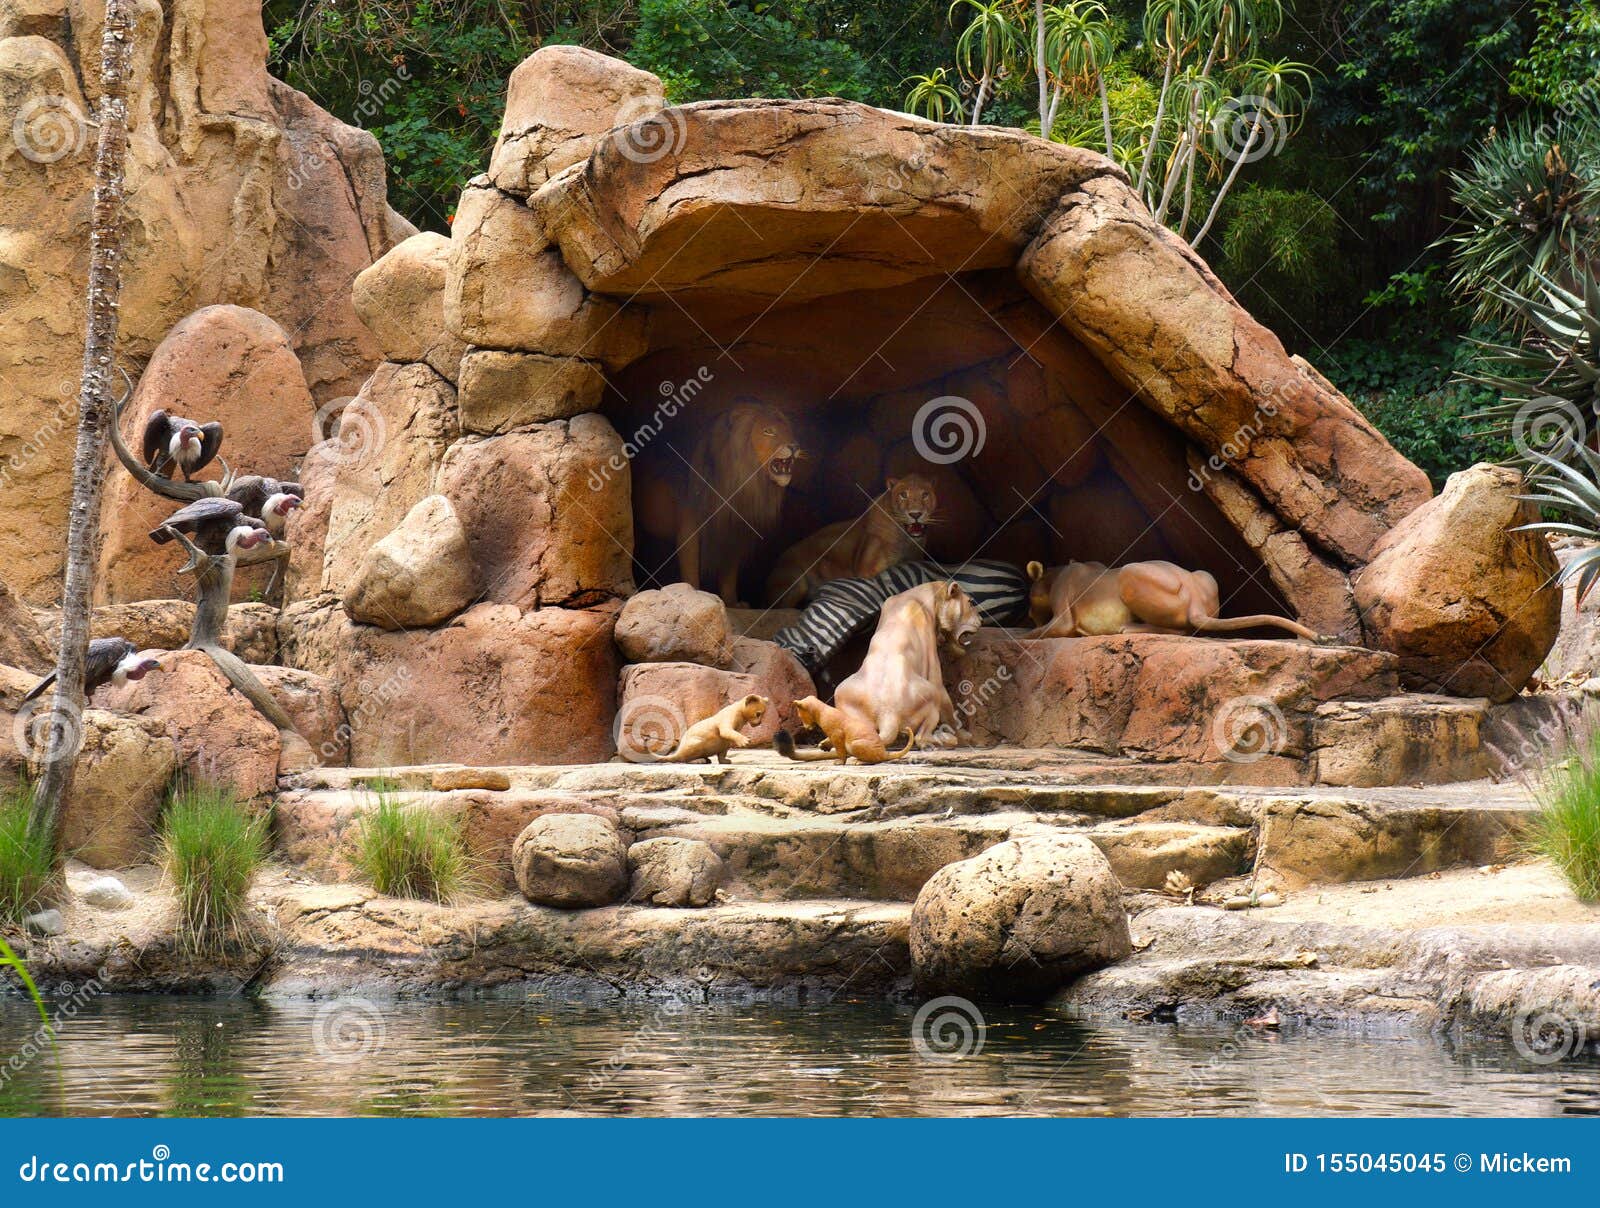 Disney Jungle Cruise Lions Feast On Zebra While Cubs Play Editorial Image Image Of Alligator Adventureland 155045045